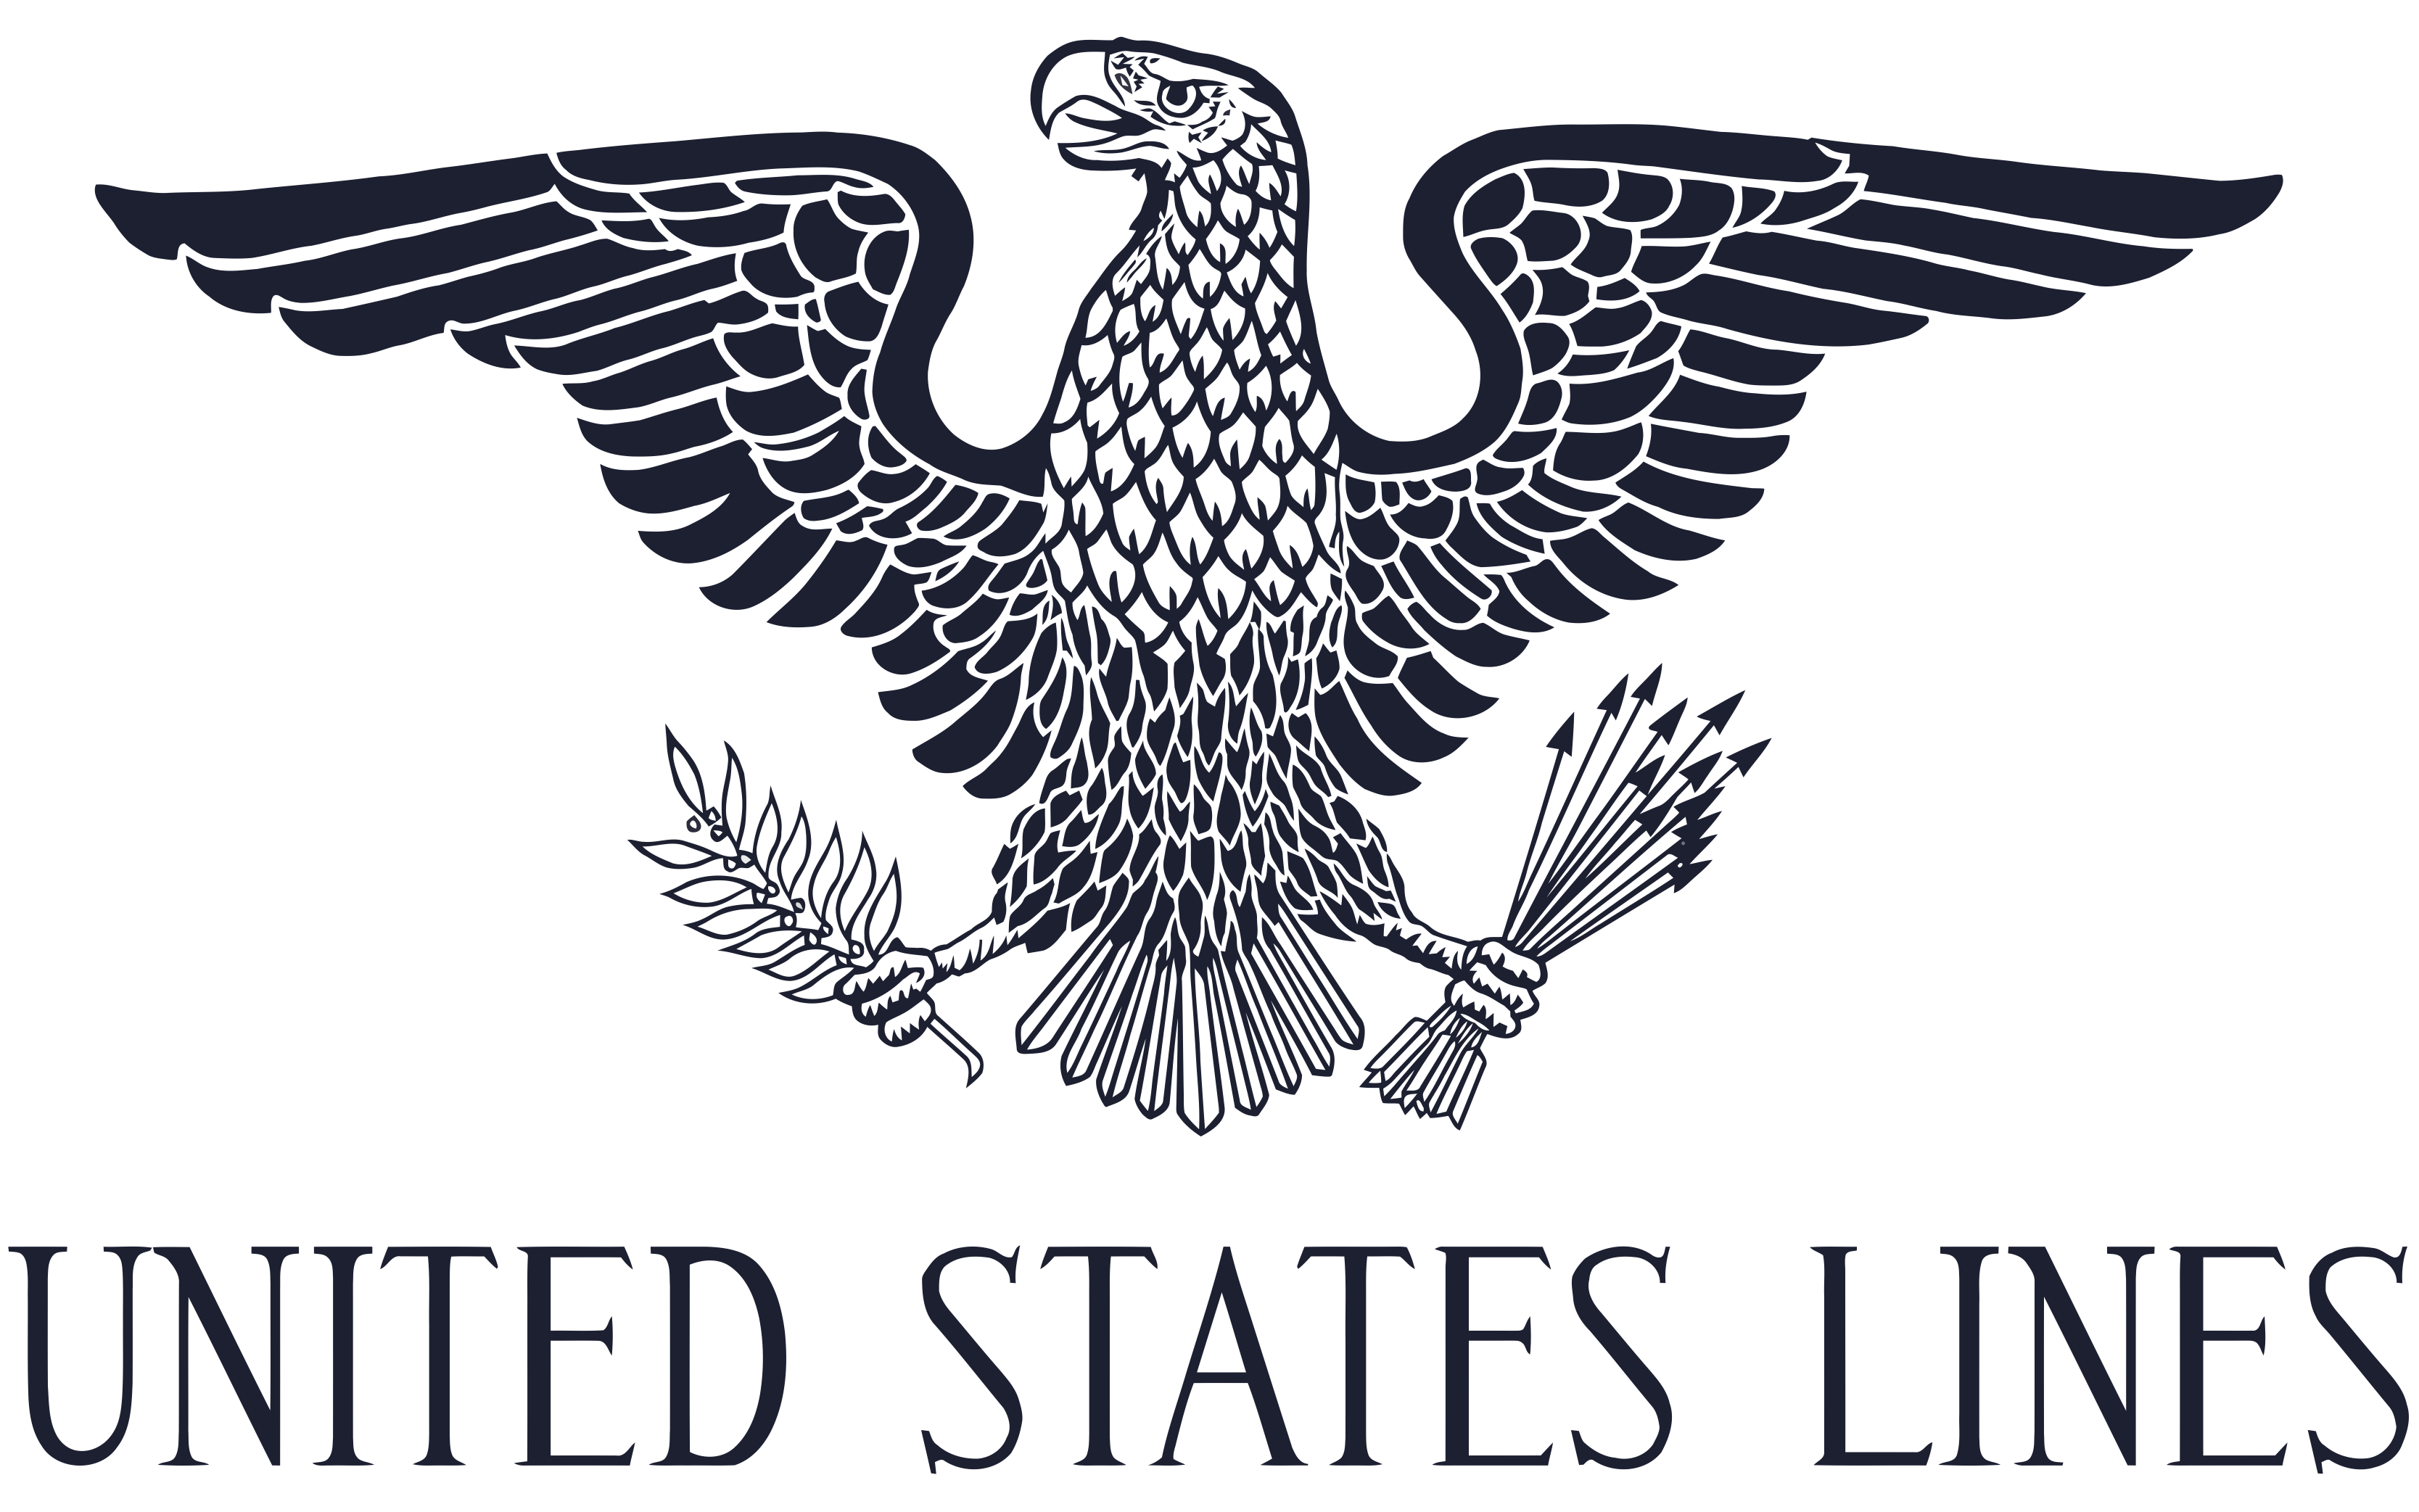 United States Eagle Logo - United States Lines Logo.png